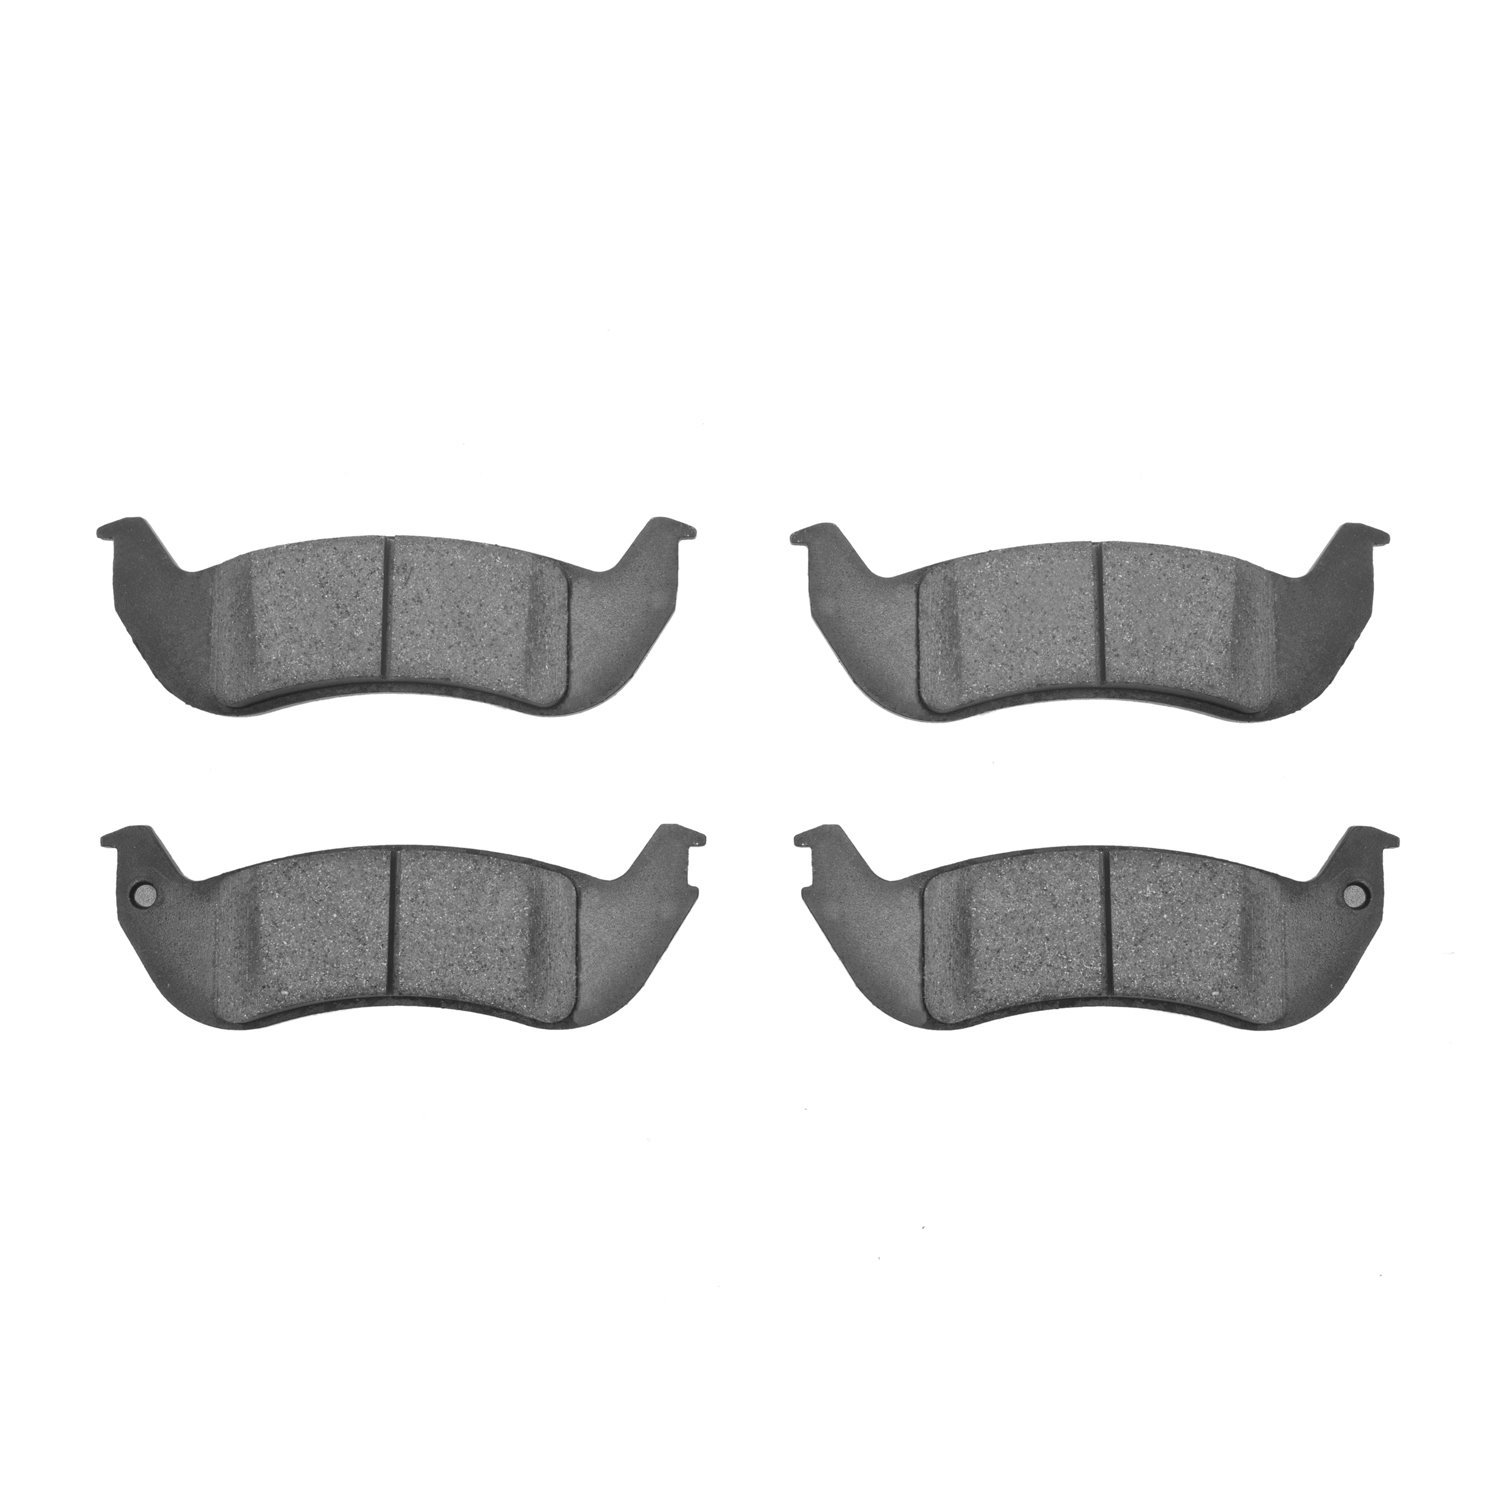 1214-0932-00 Heavy-Duty Semi-Metallic Brake Pads, 2003-2011 Ford/Lincoln/Mercury/Mazda, Position: Rear